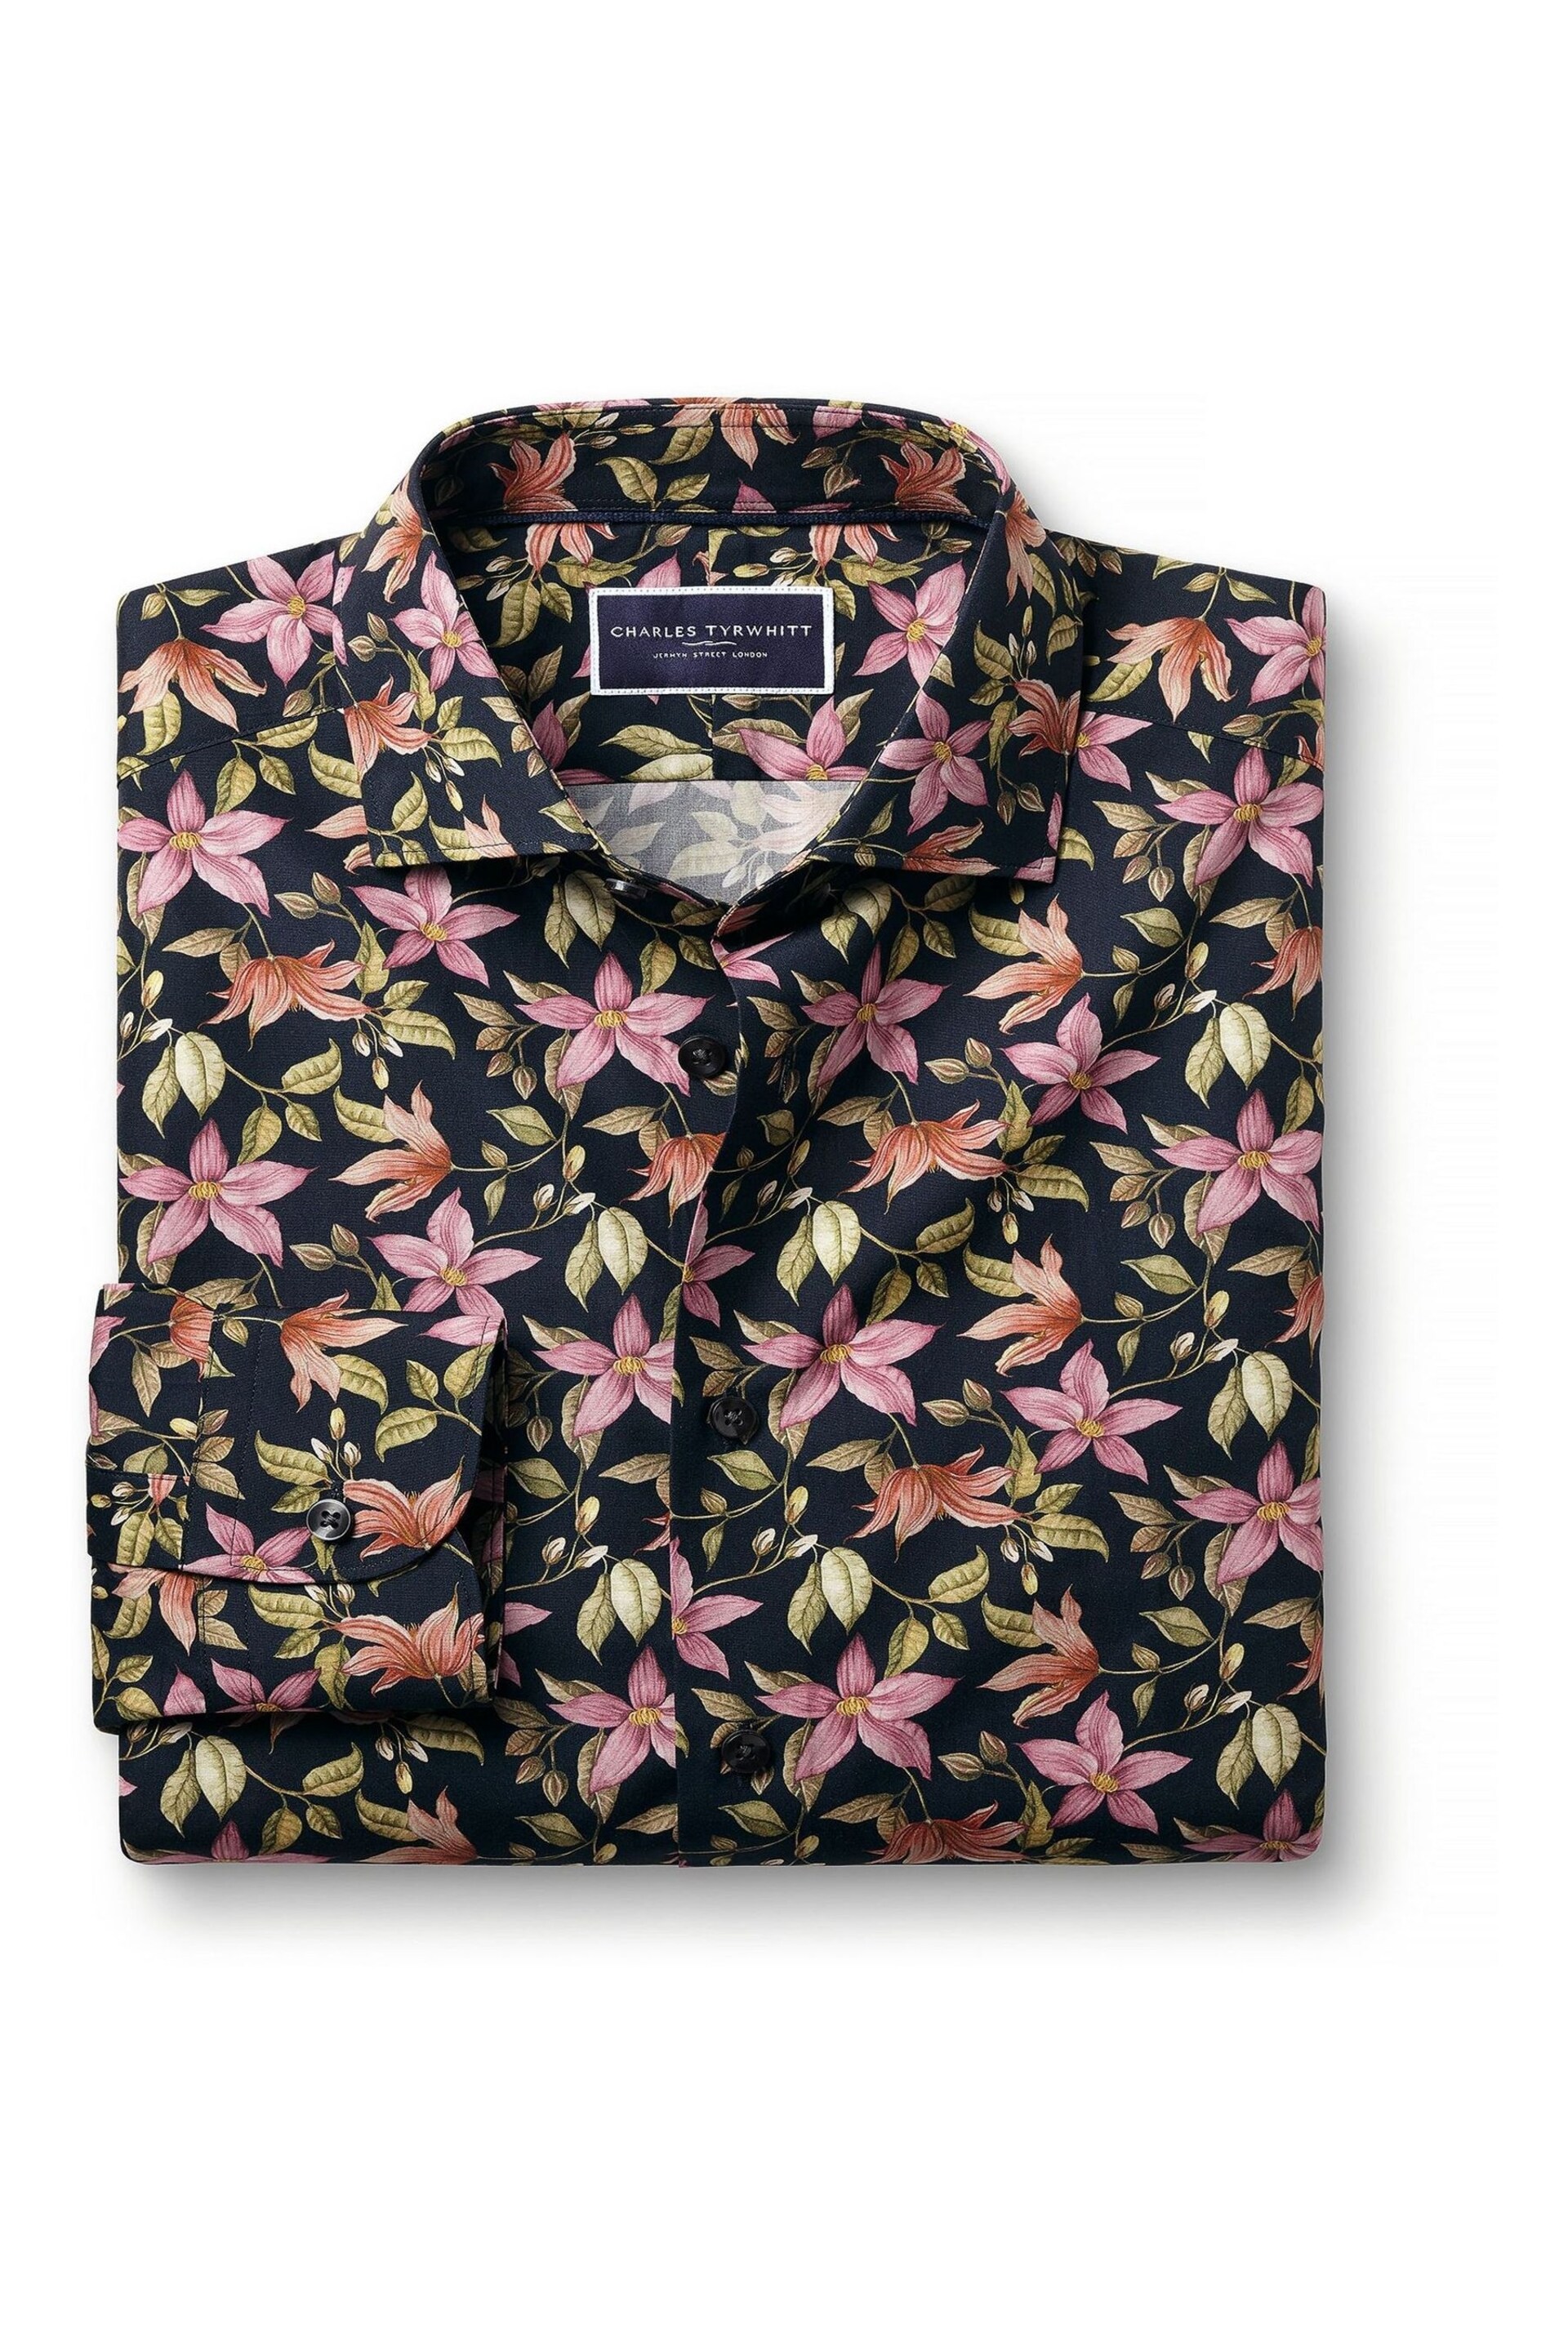 Charles Tyrwhitt Blue Slim Fit Liberty Fabric Floral Print Shirt - Image 4 of 6